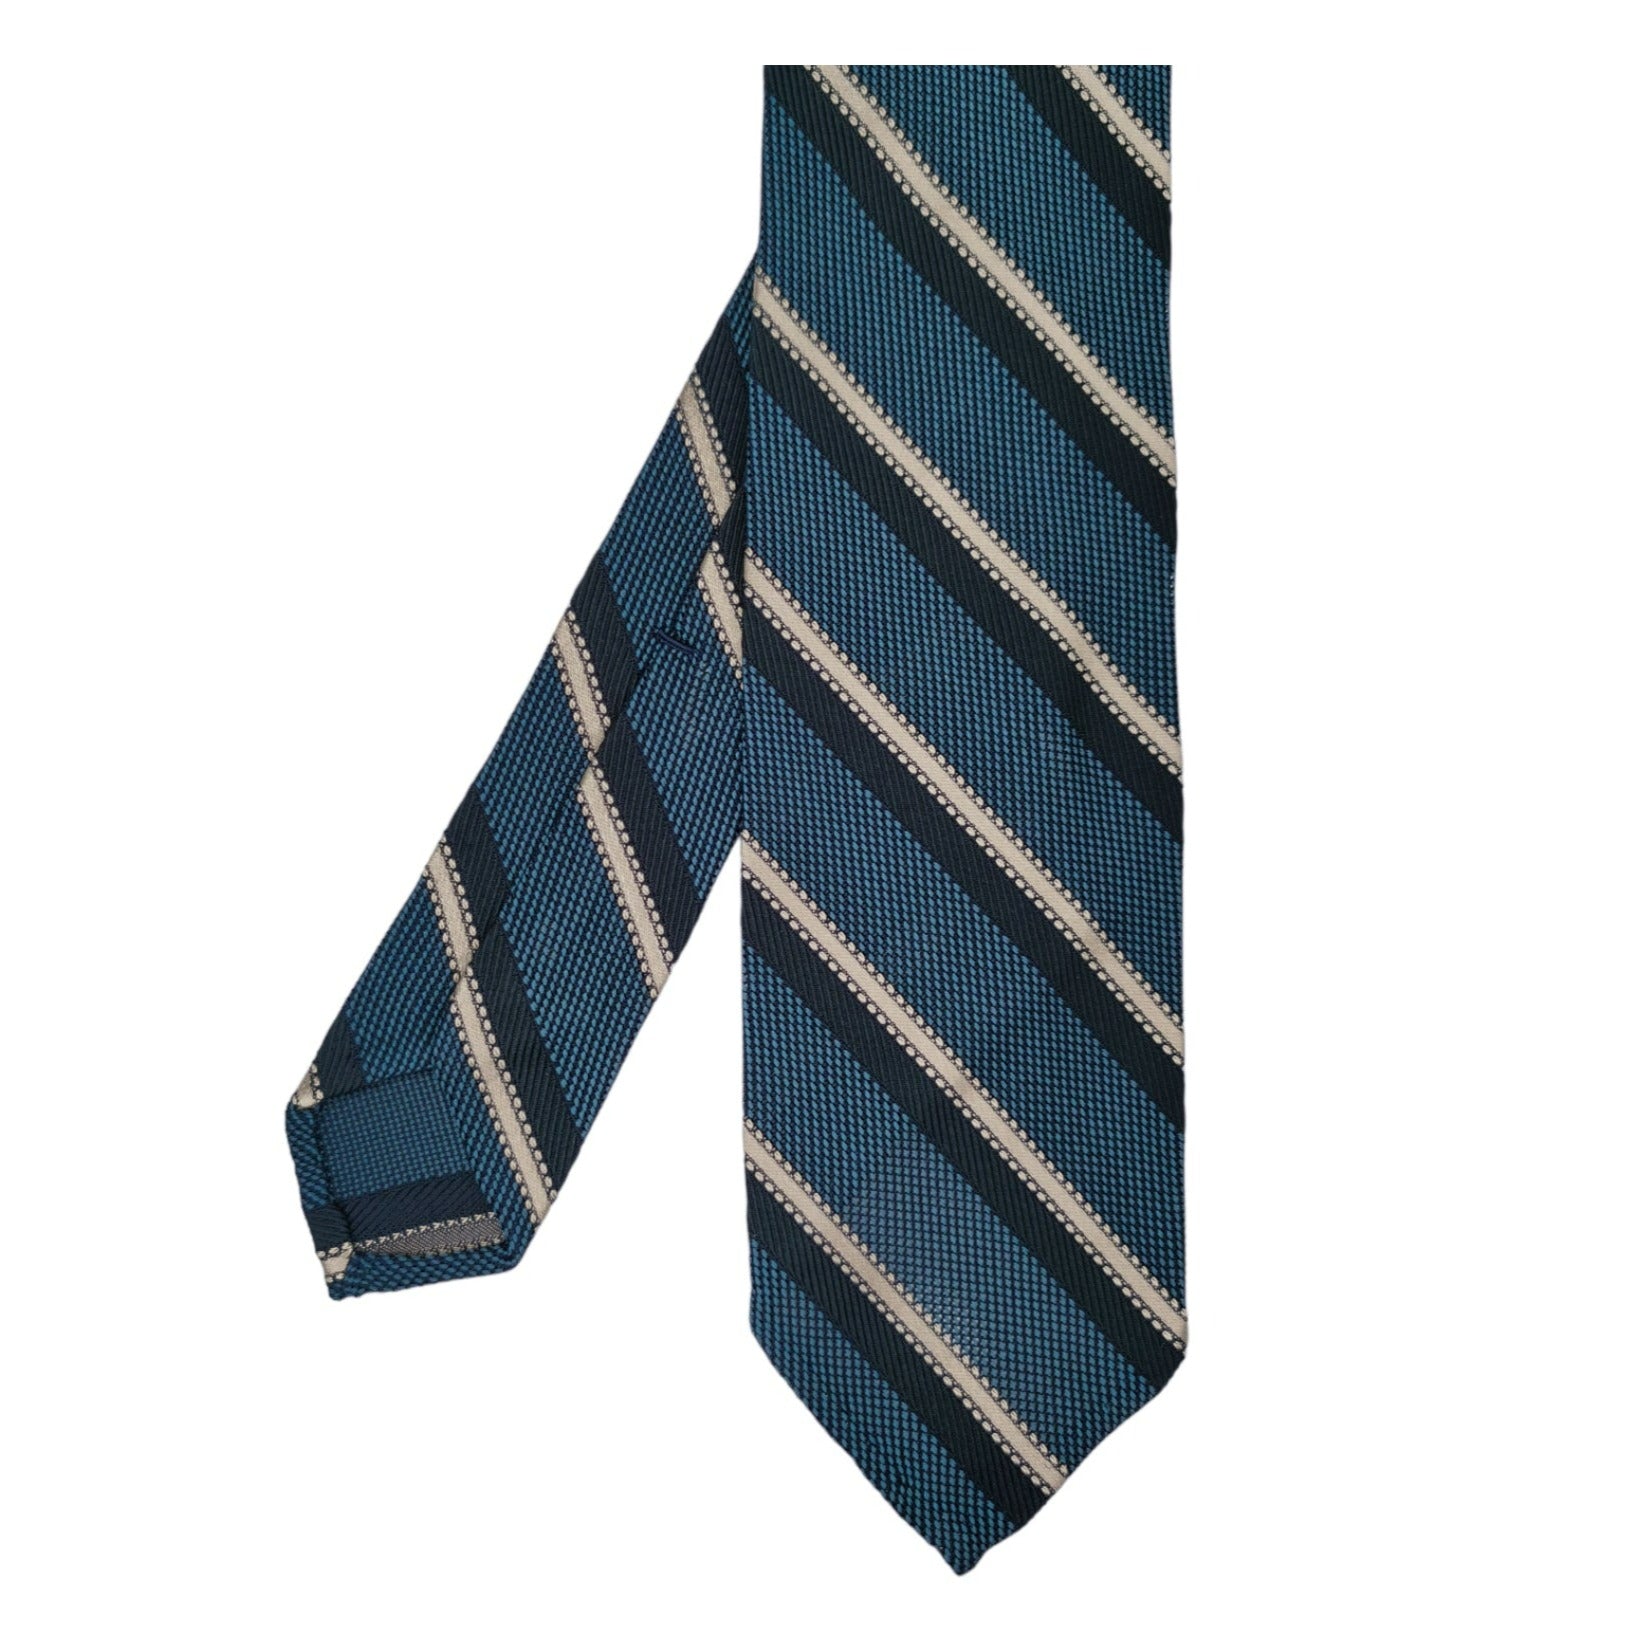 Anversa regimental silk gauze tie light blue with black sand stripes